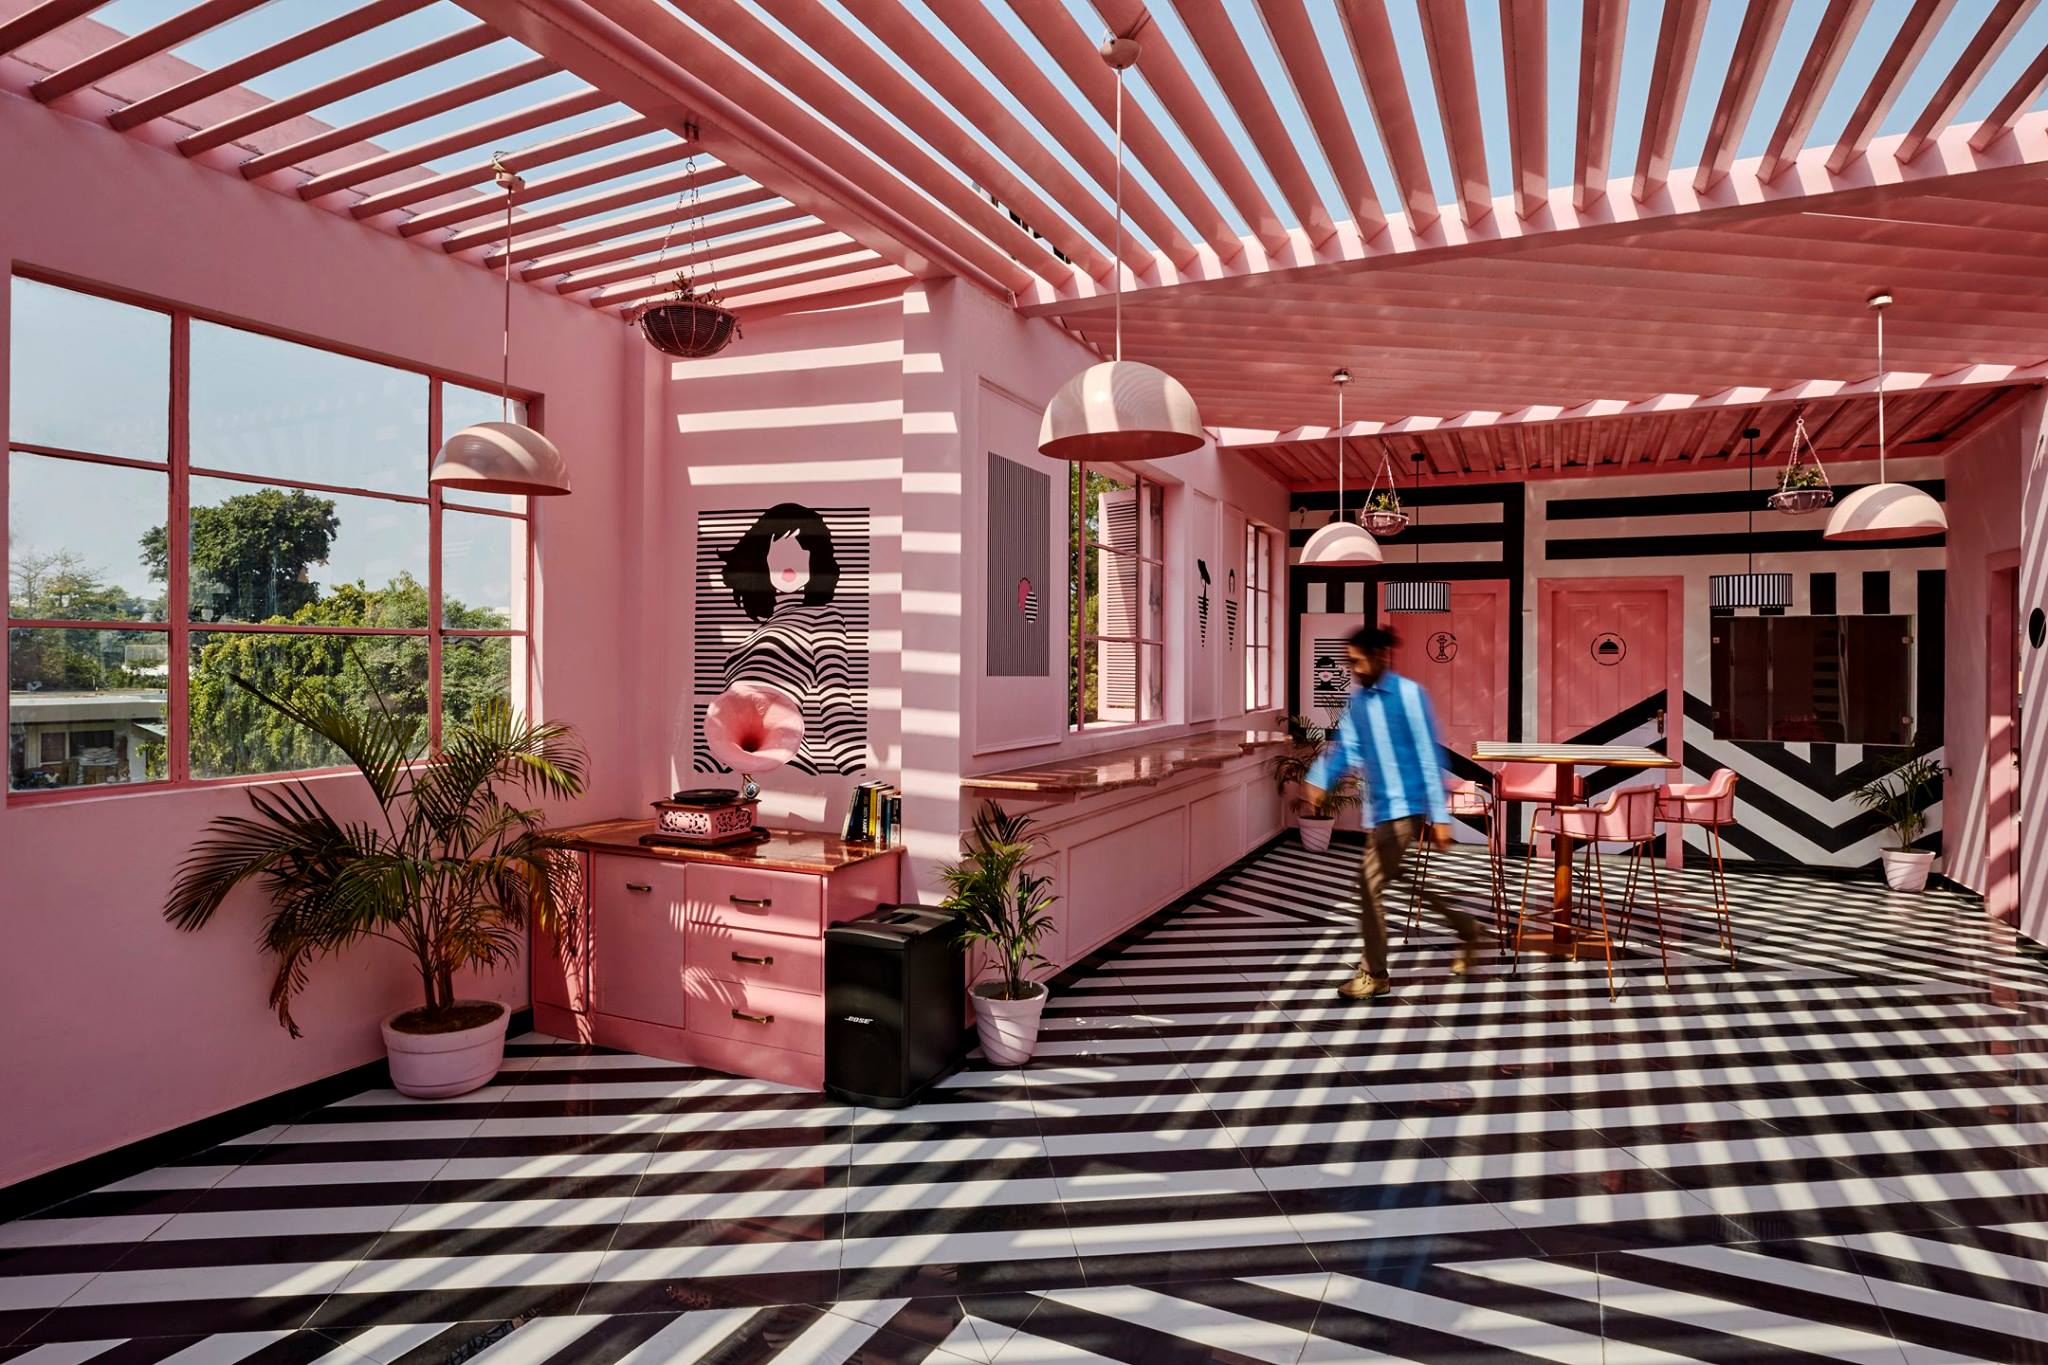 The Pink Zebra-RENESA Architecture Studio